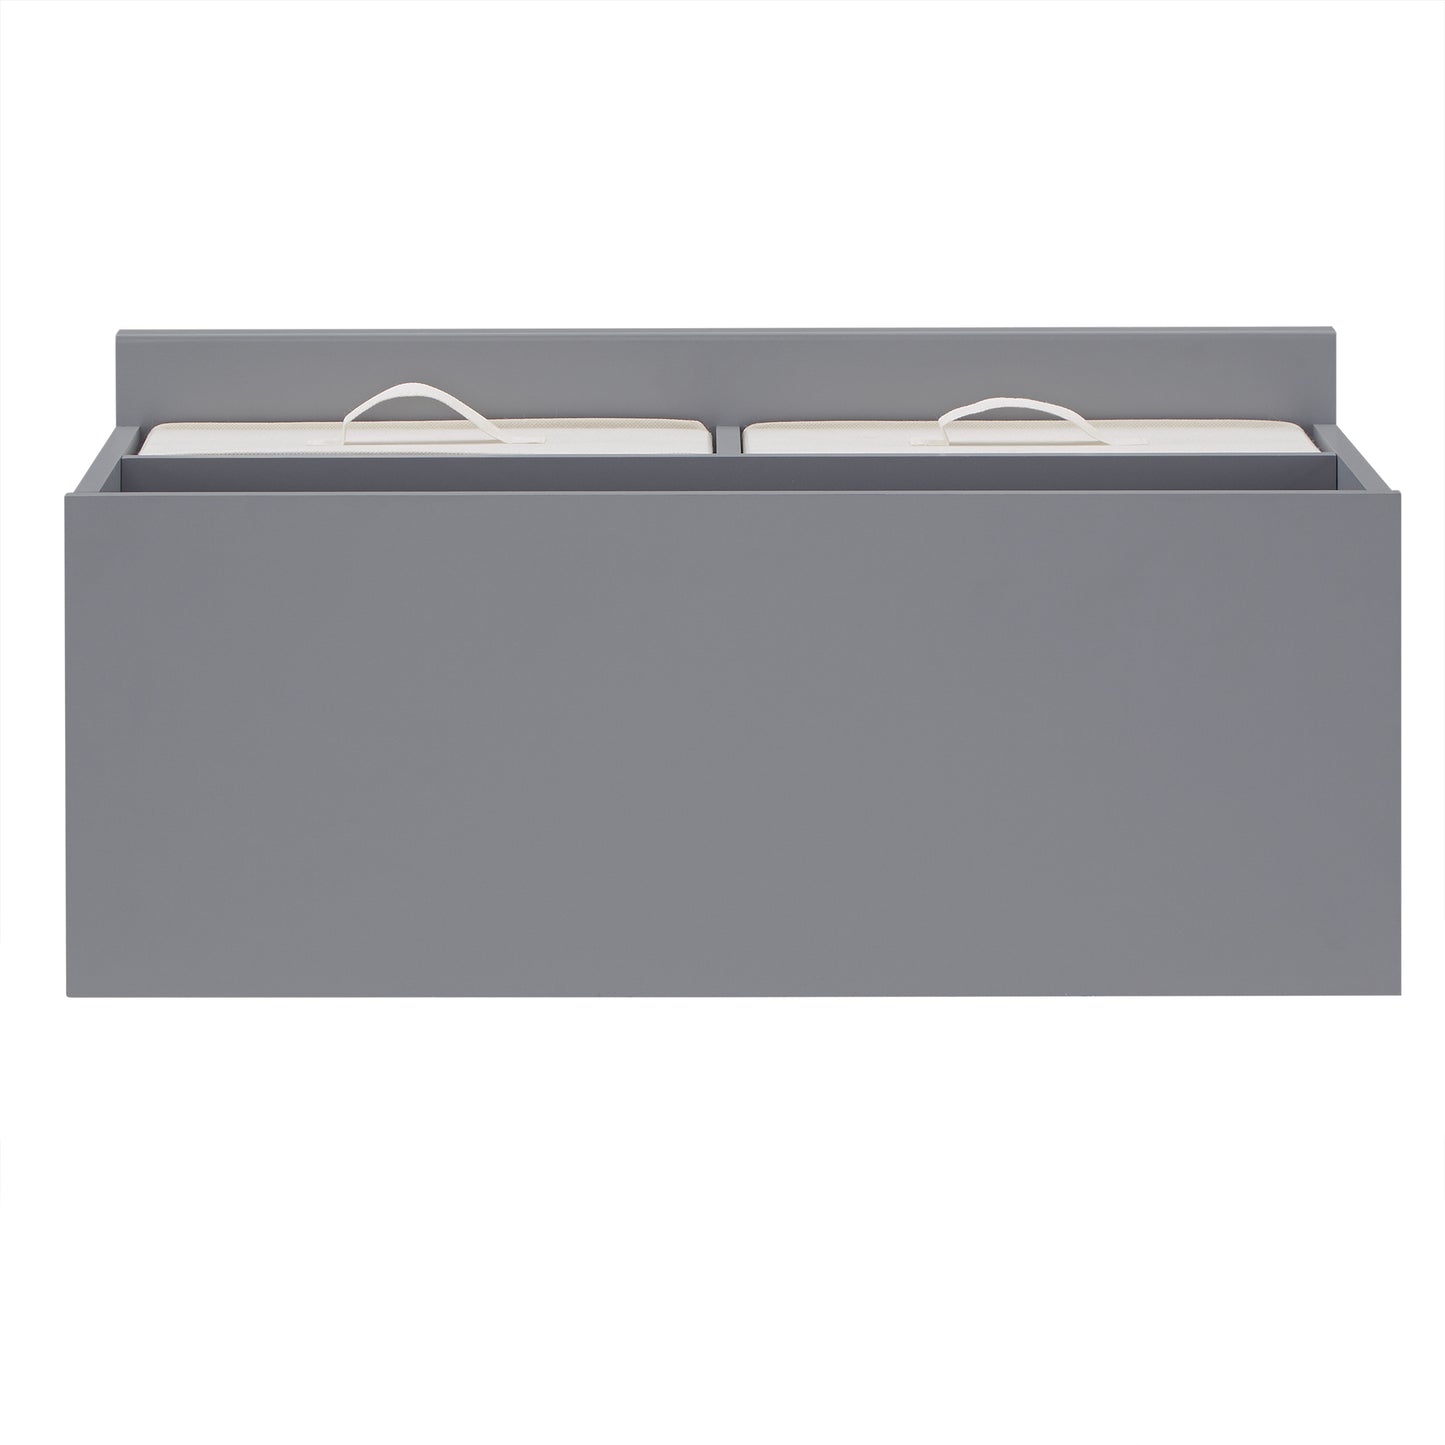 Modular Stacking Storage Bins - Frost Gray, 1 Box with 2 Drawars